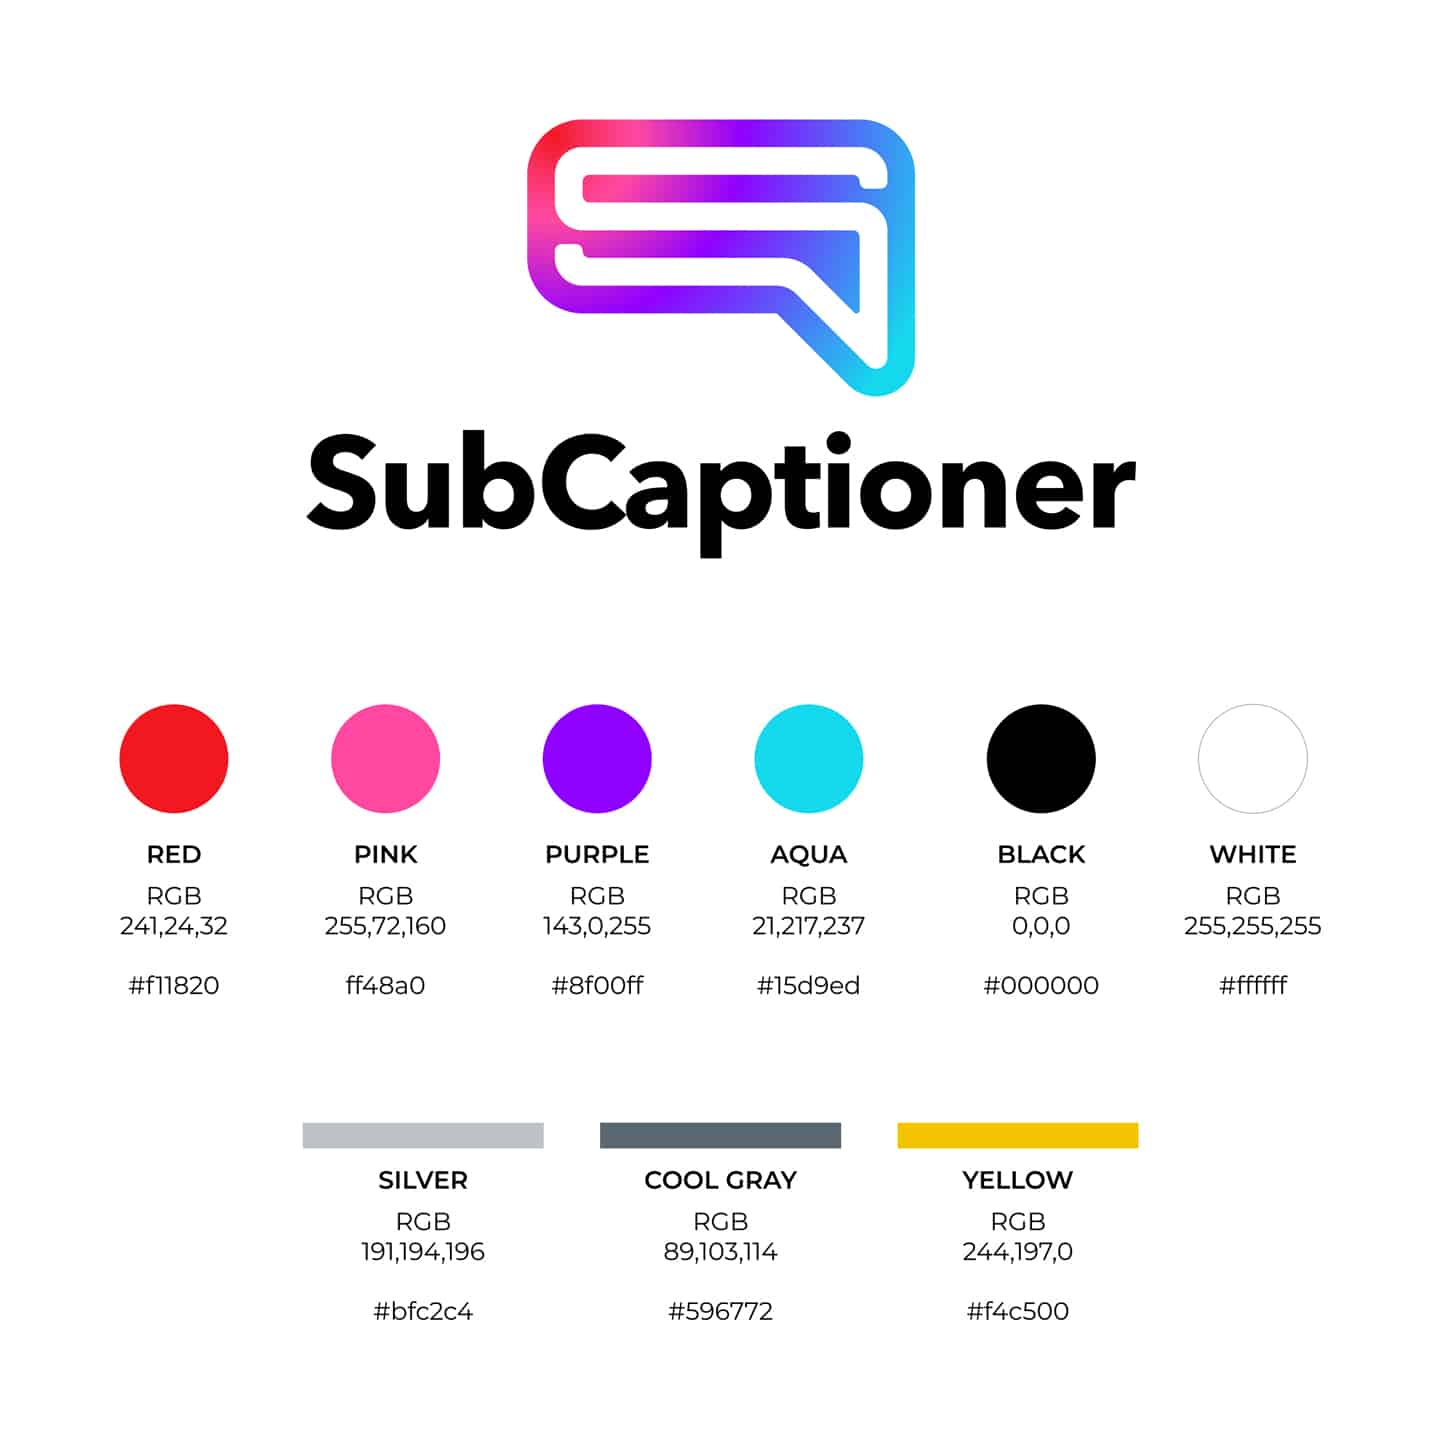 SubCaptioner final logo & color palette